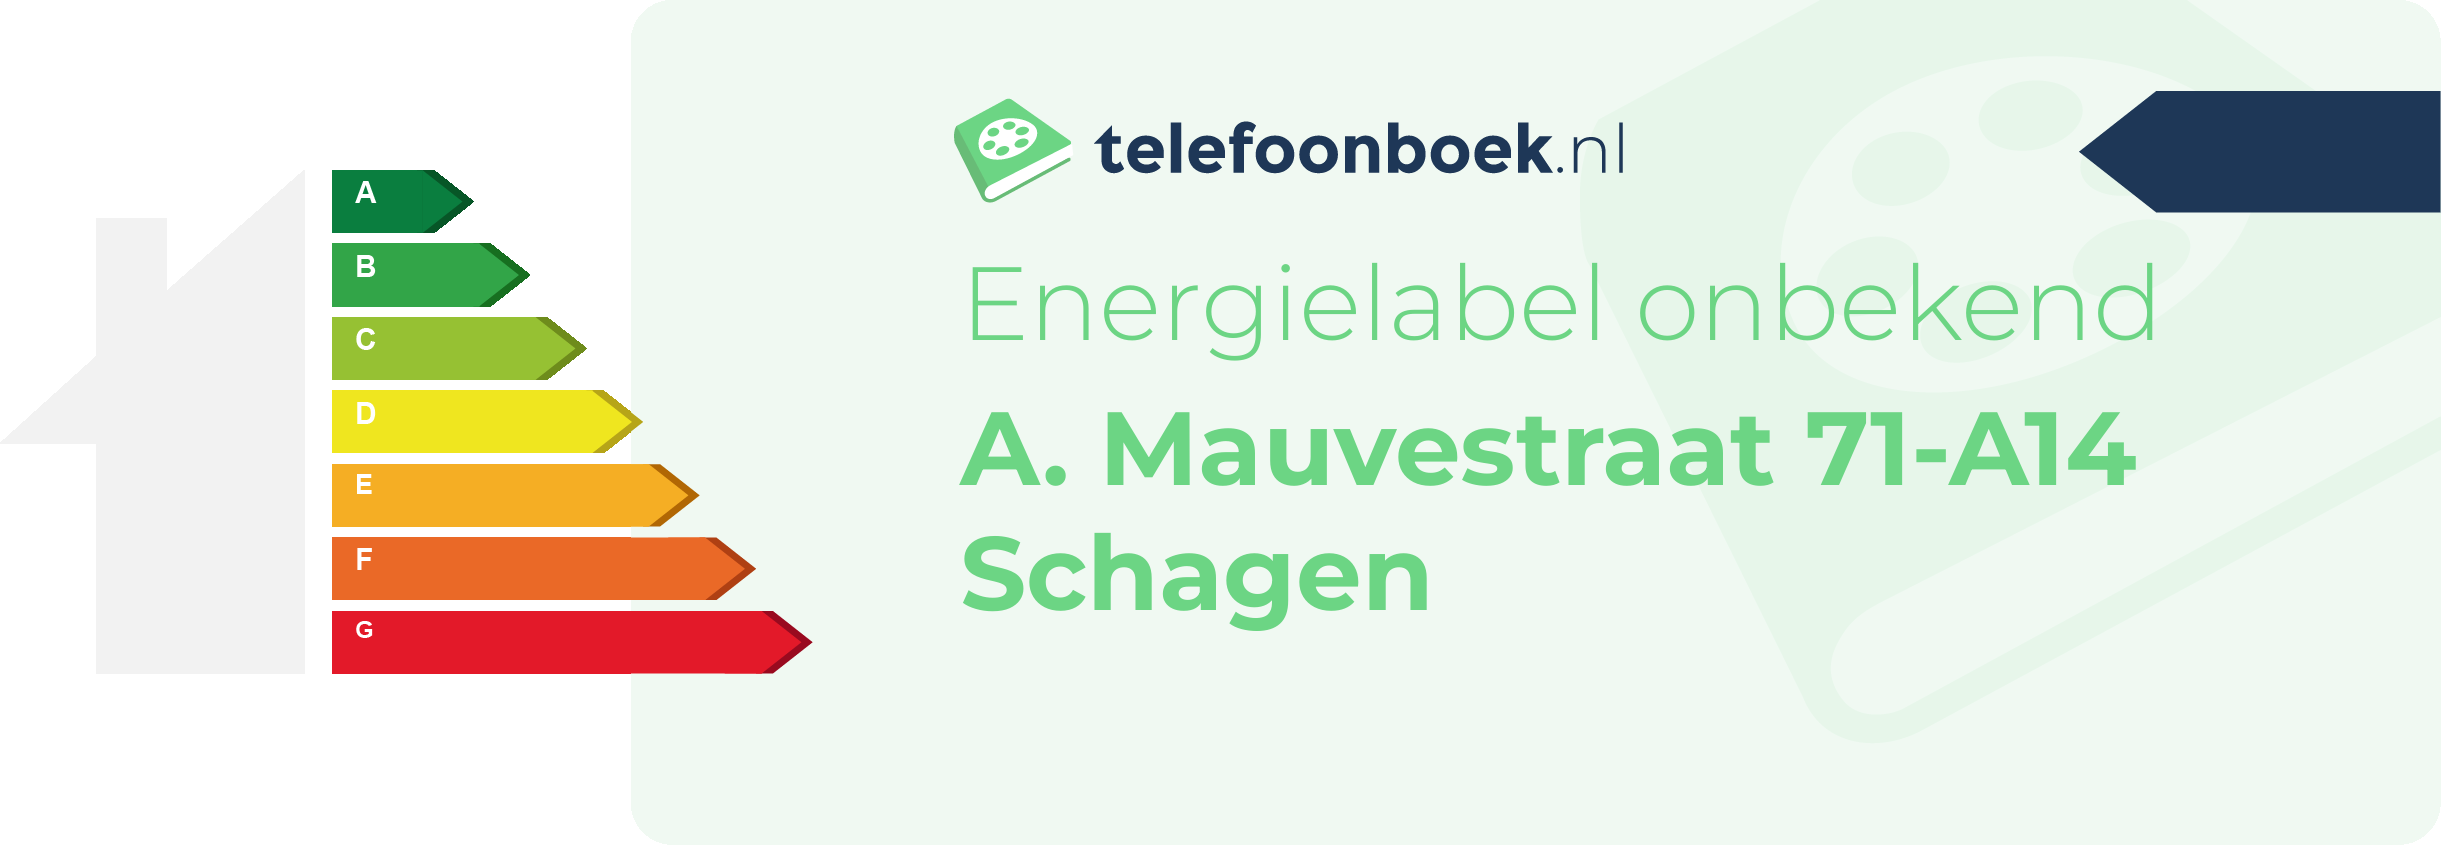 Energielabel A. Mauvestraat 71-A14 Schagen